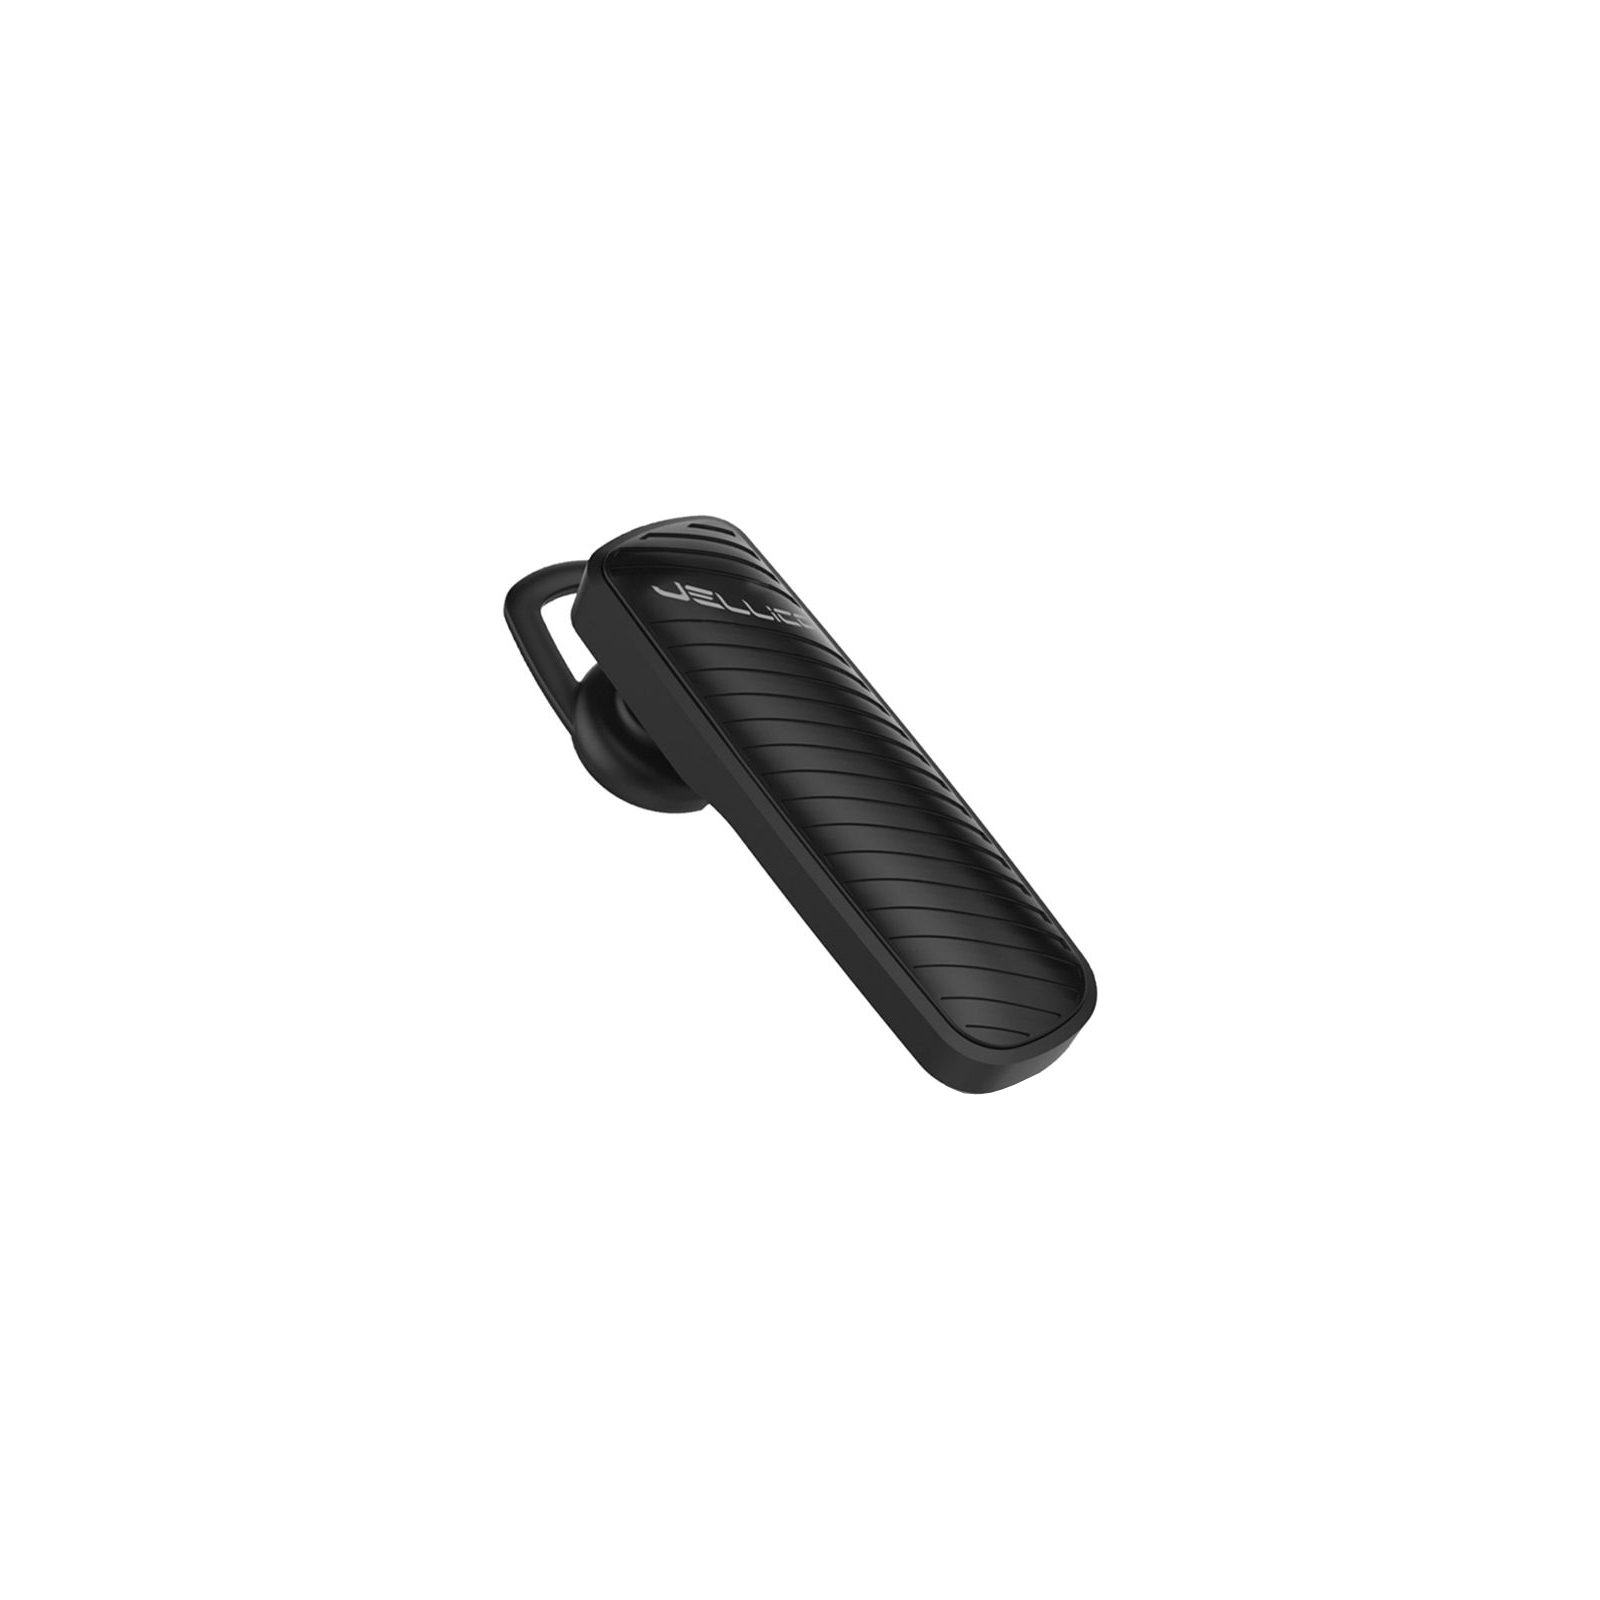 Bluetooth-гарнитура Jellico S200 Black (RL050511)